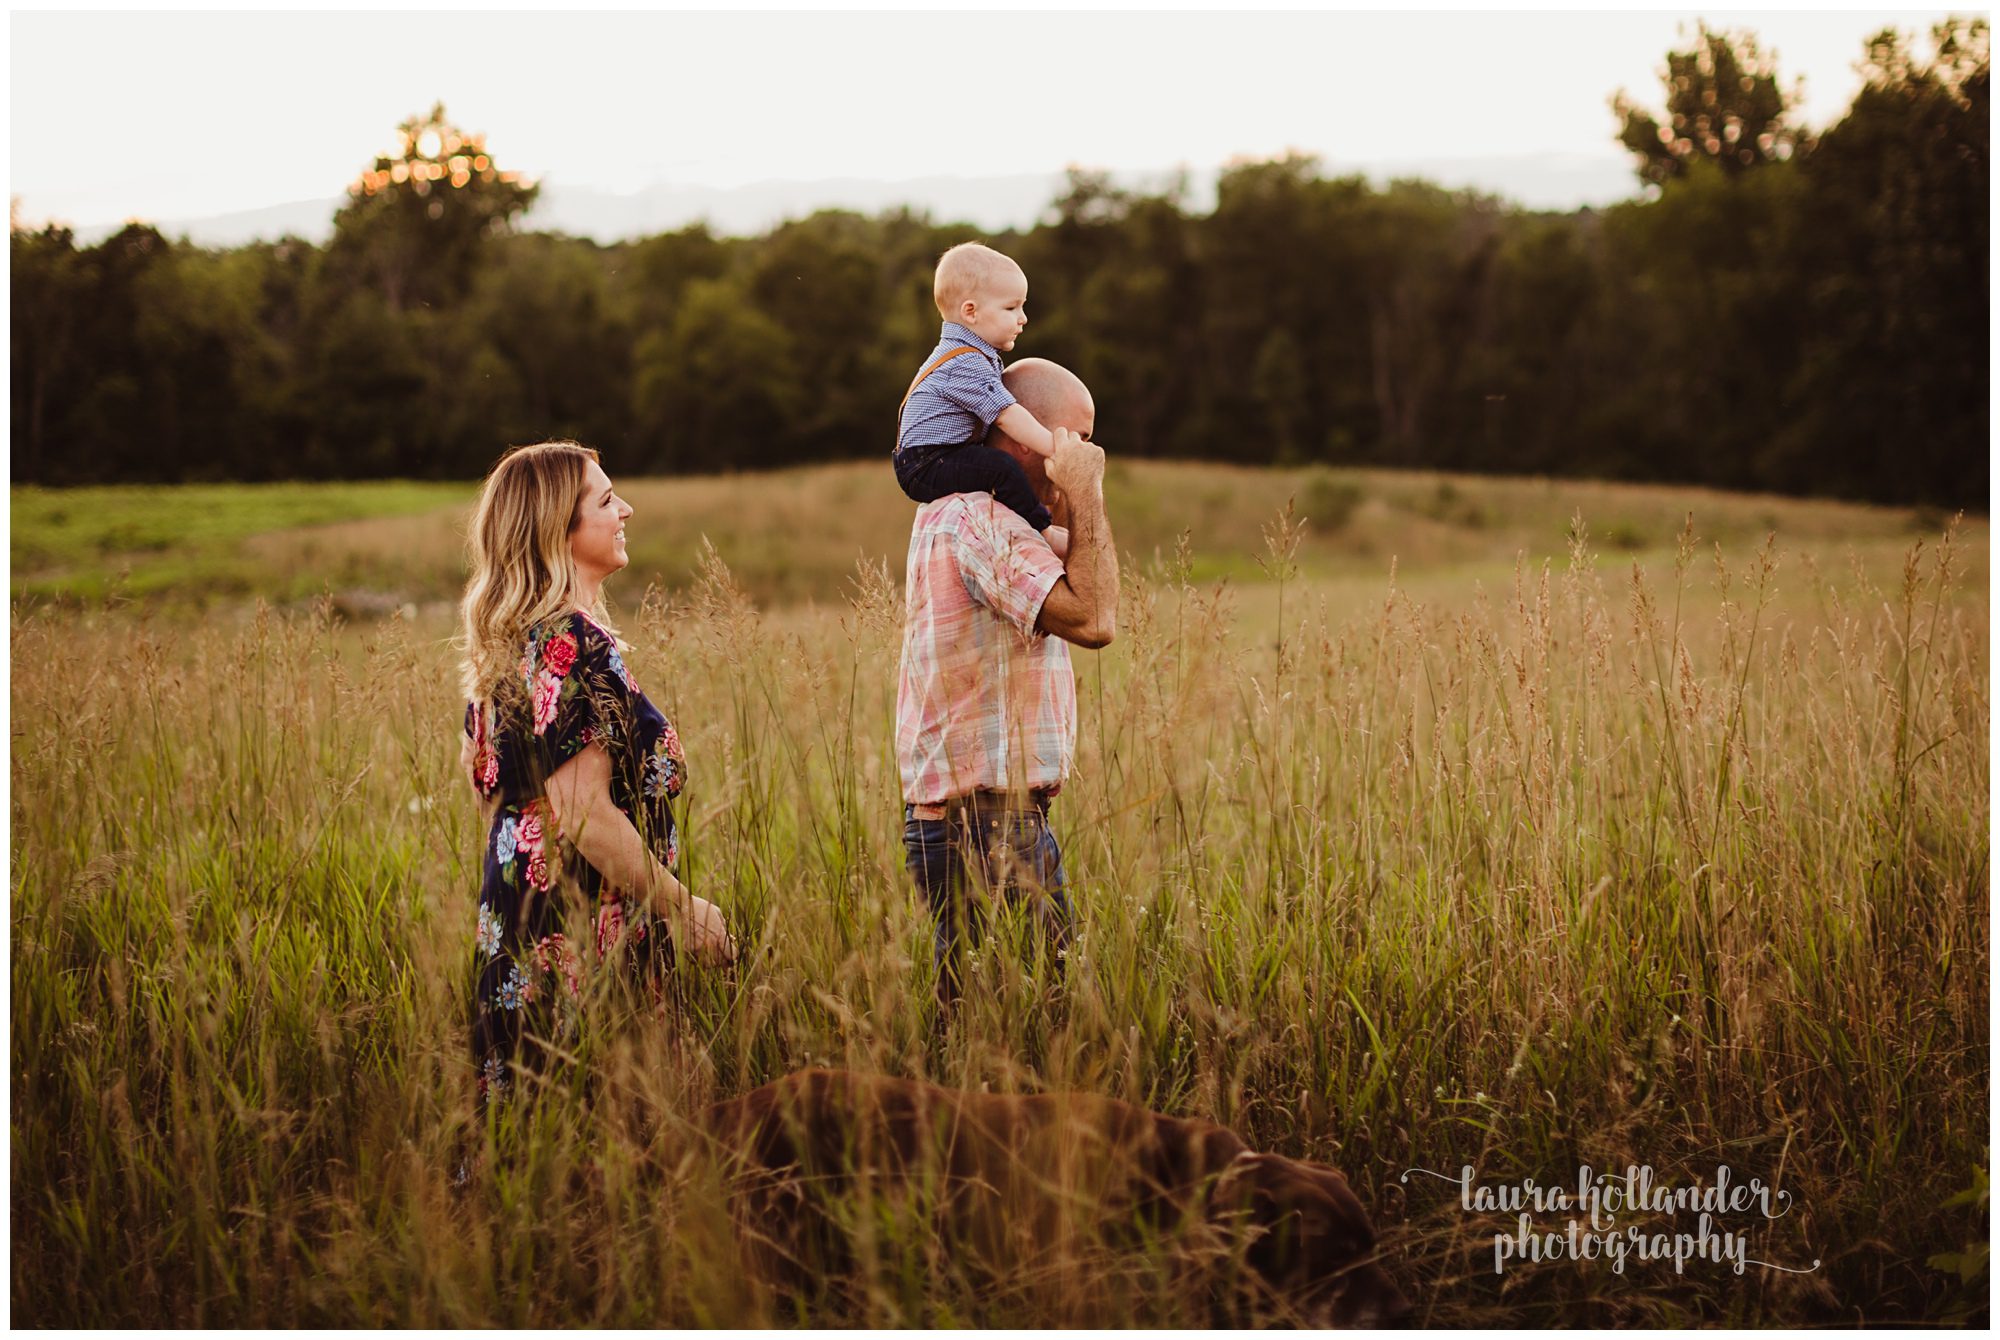 one year milestone, family portraits in a field, Laura Hollander Photography, Battle Creek, MI